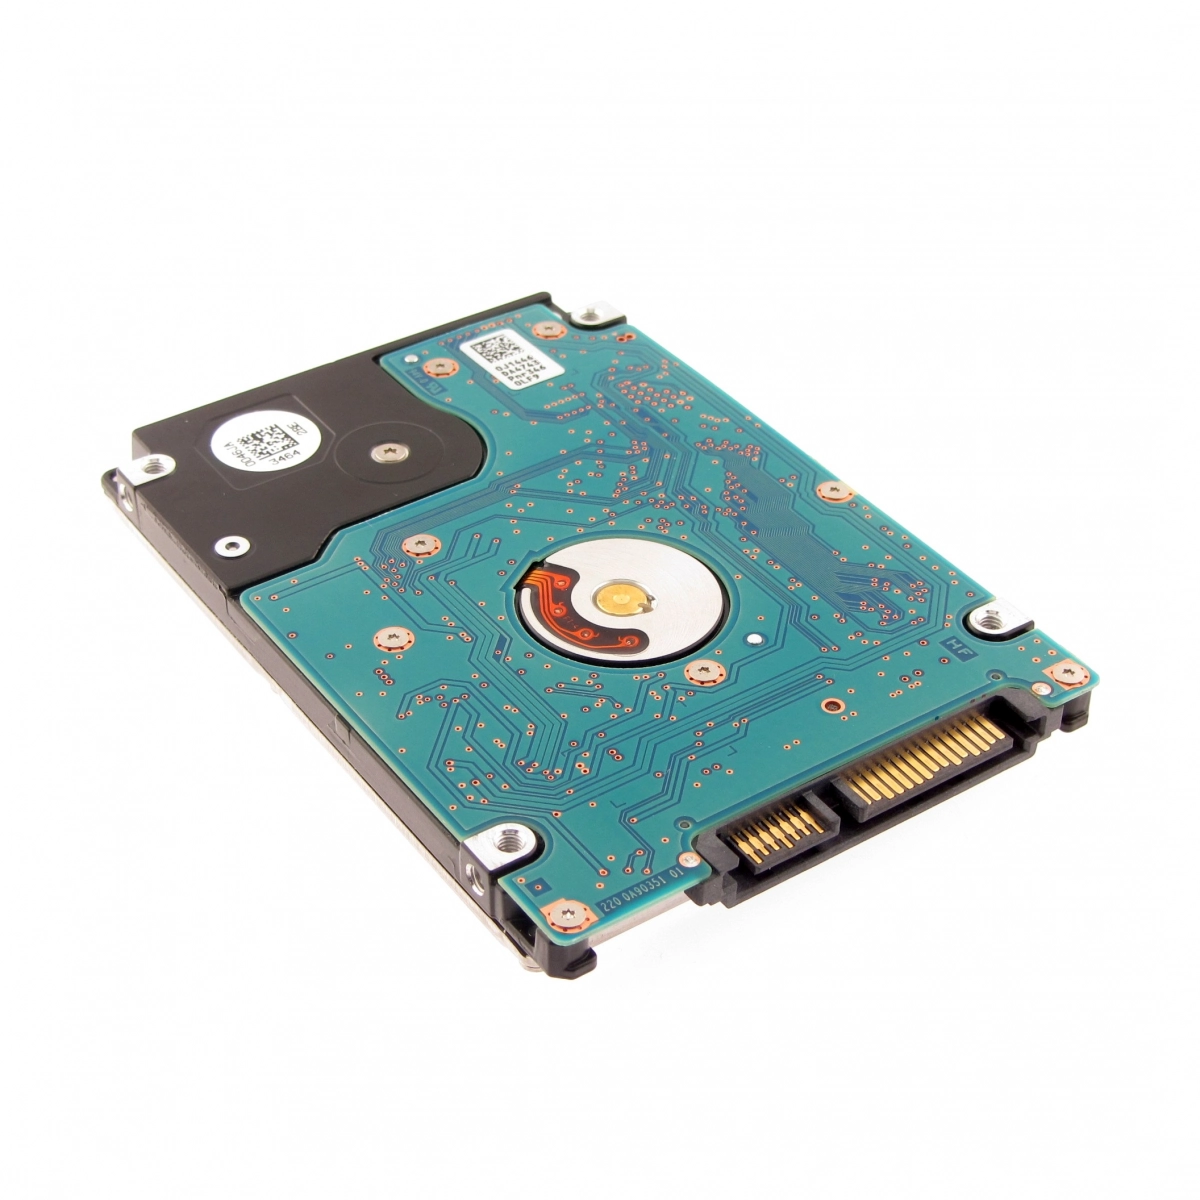 Notebook-Festplatte 1TB, 5400rpm, 128MB für ASUS A53S